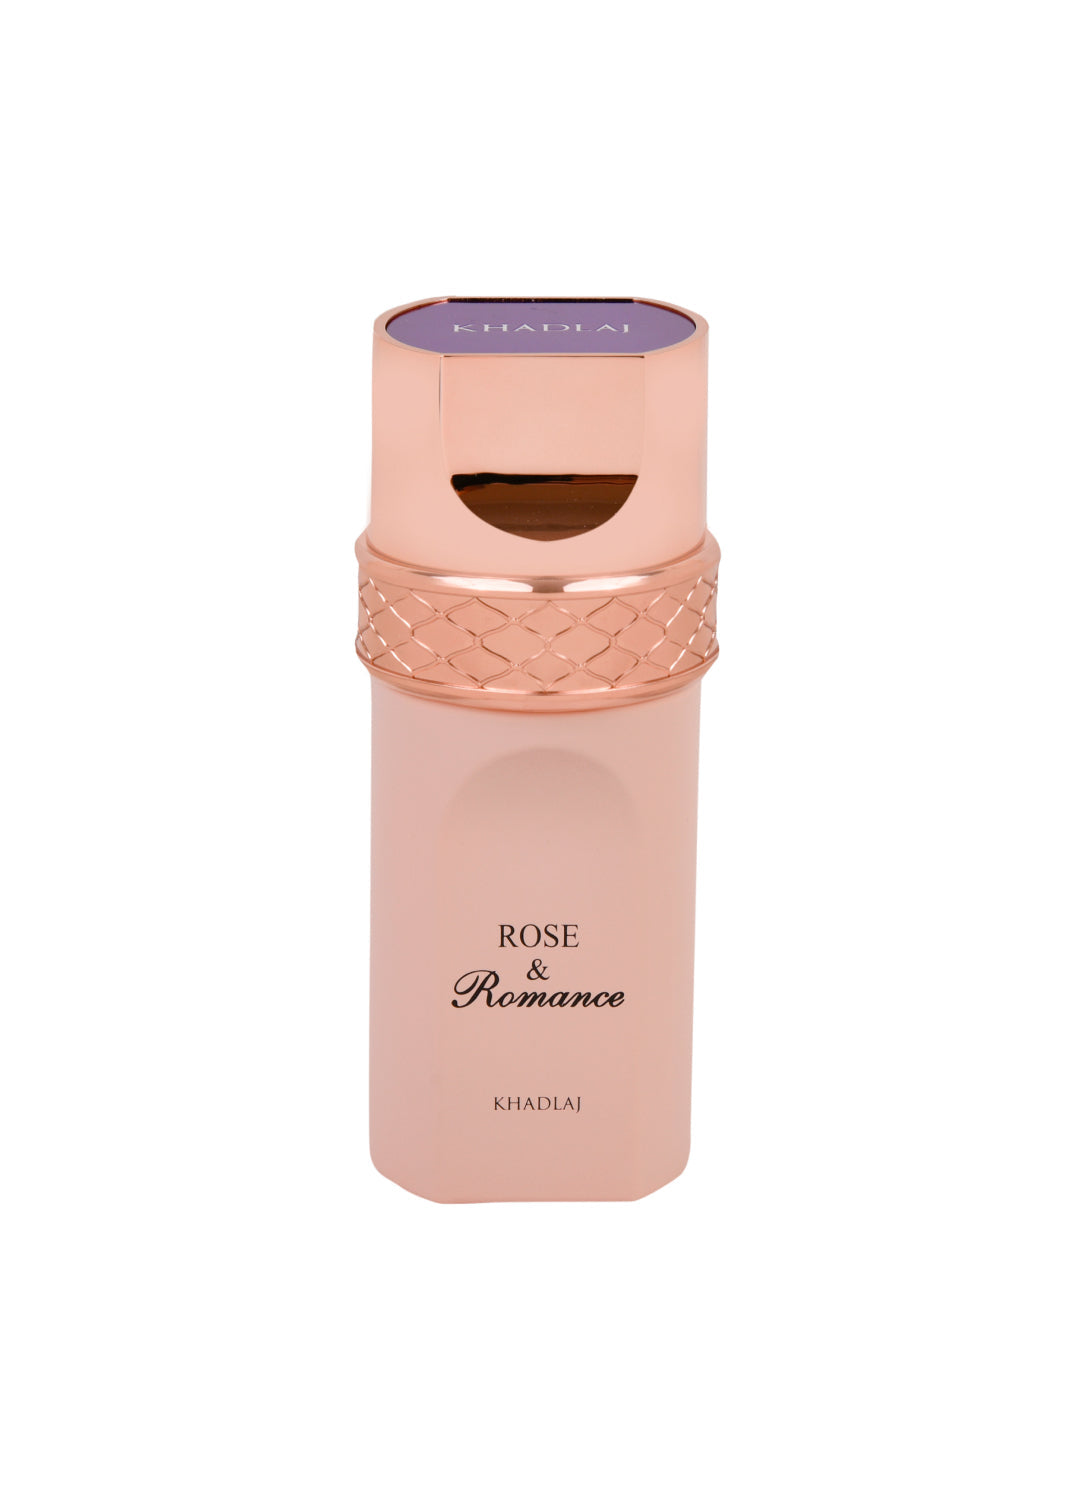 Rose and Romance Women's Eau de Parfum Spray - 100ml by Khadlaj Perfume